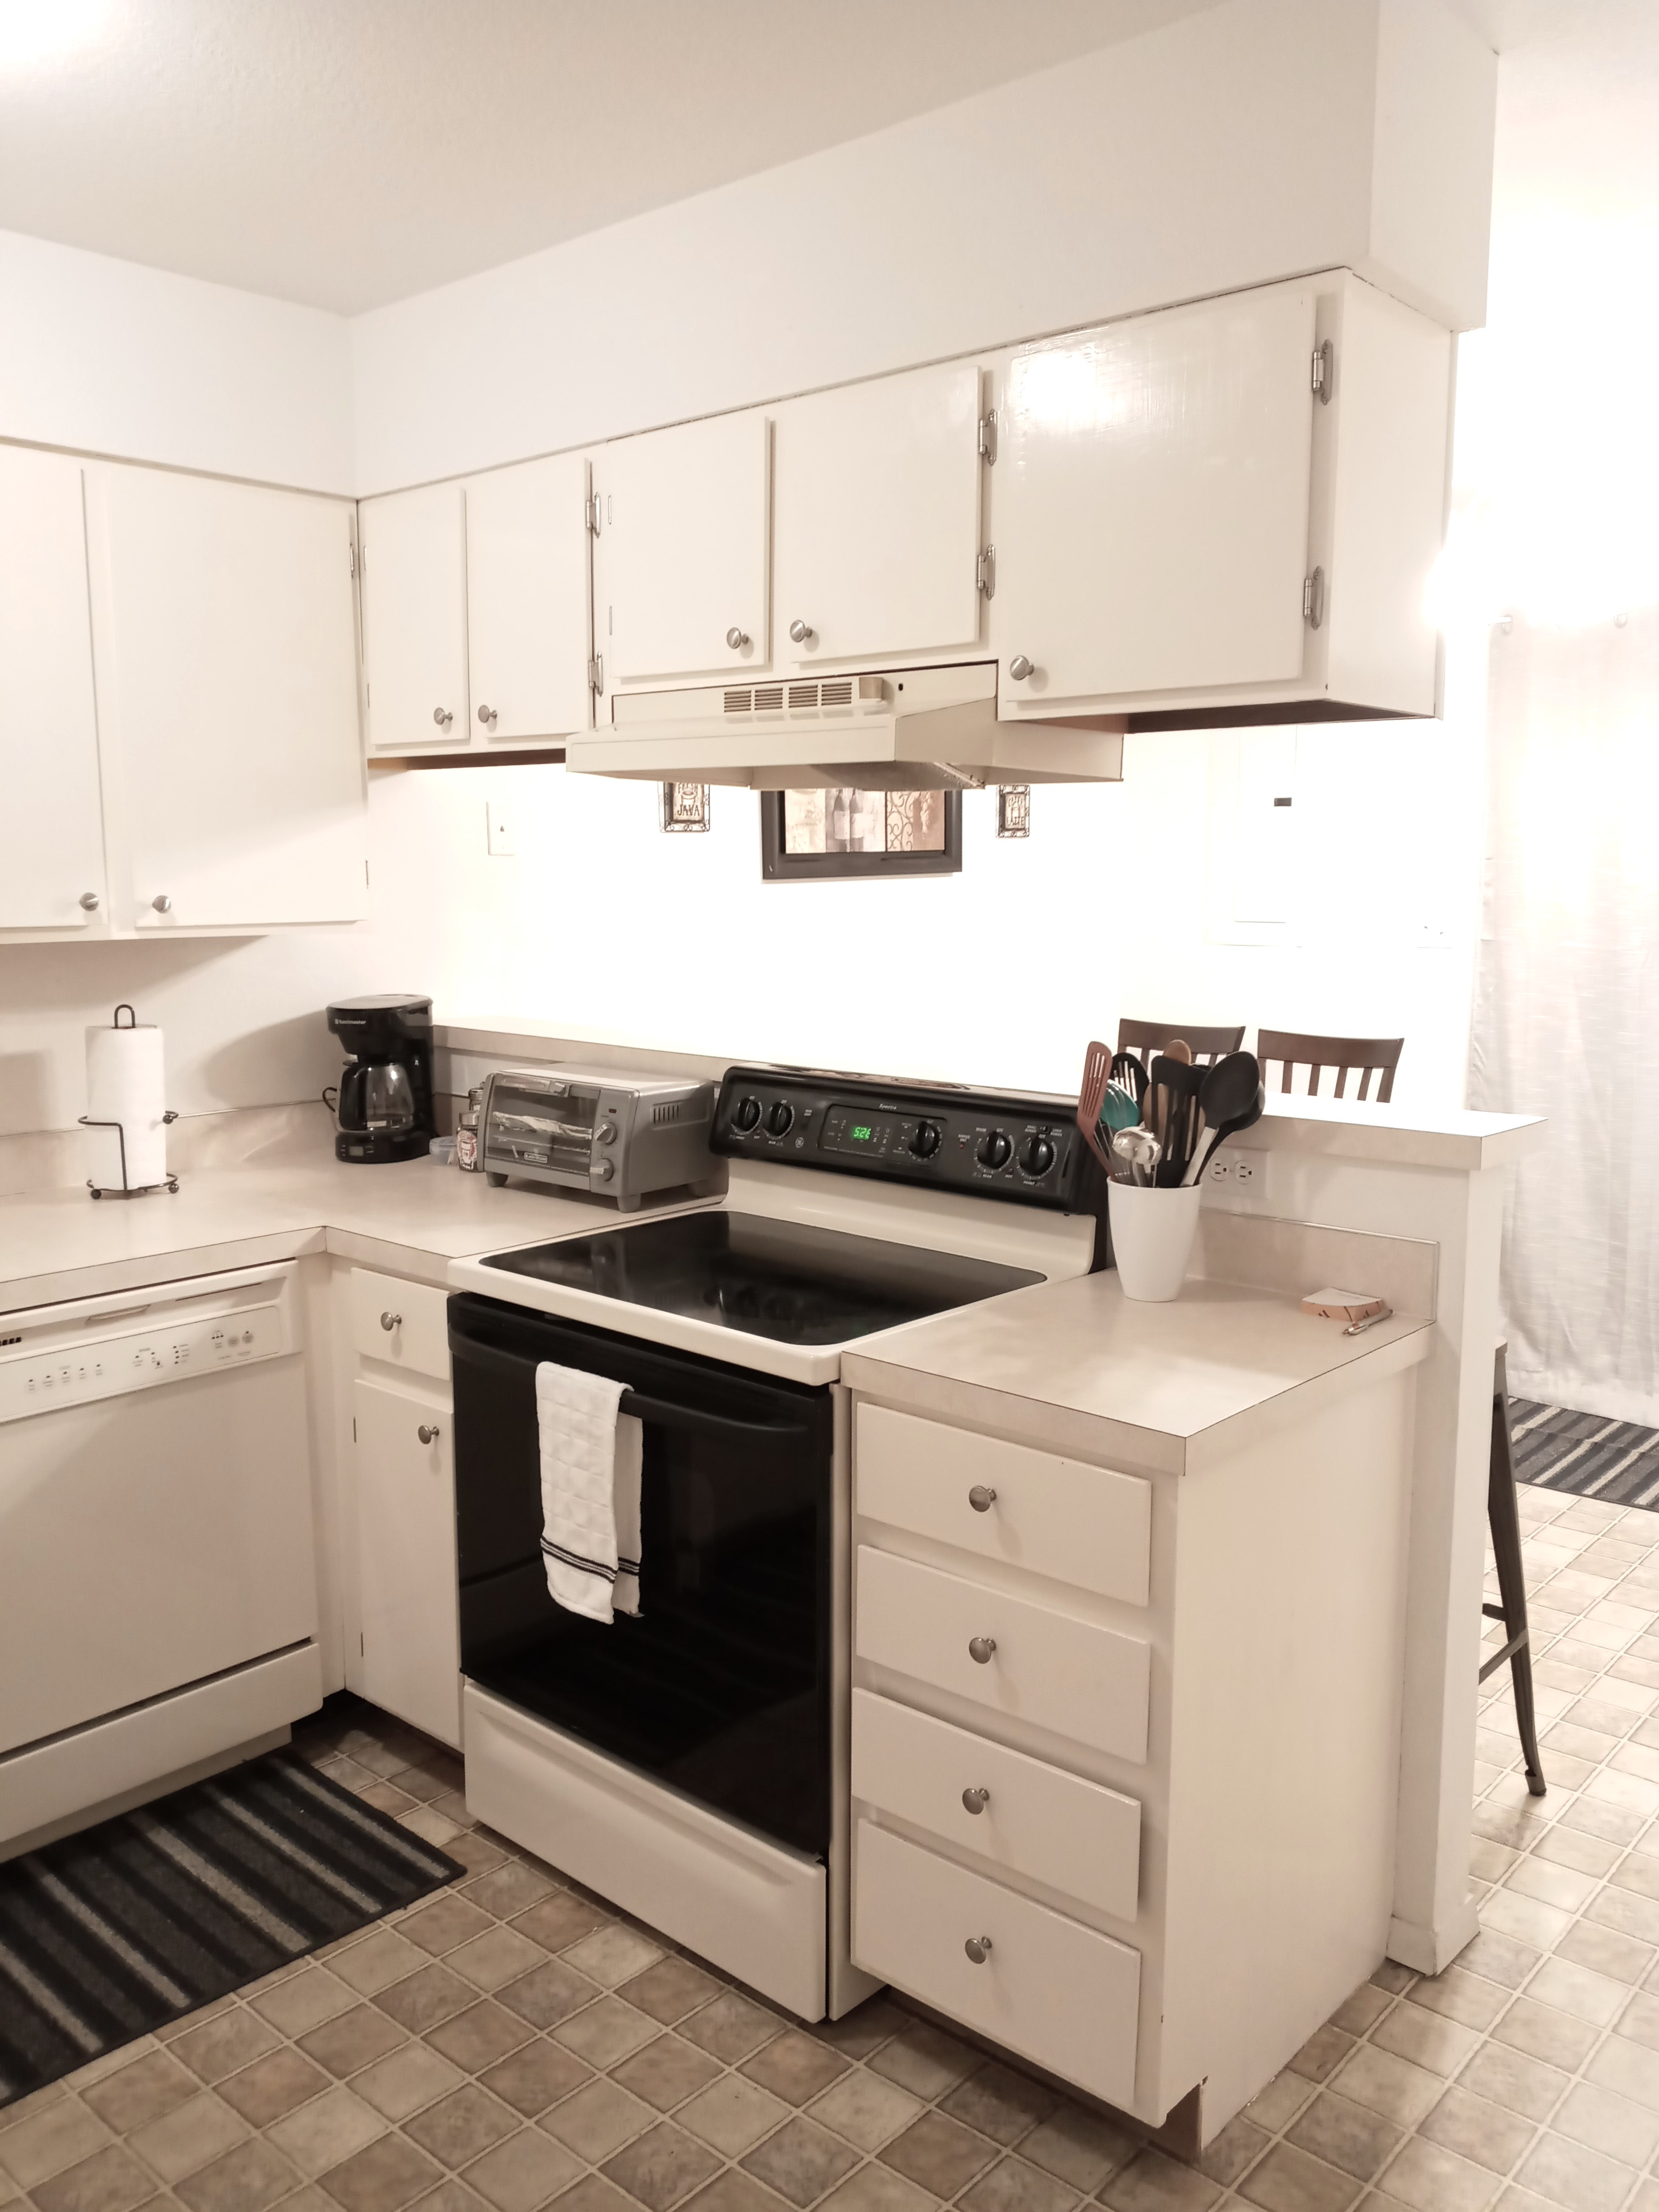 Modern kitchen in white with essential appliances